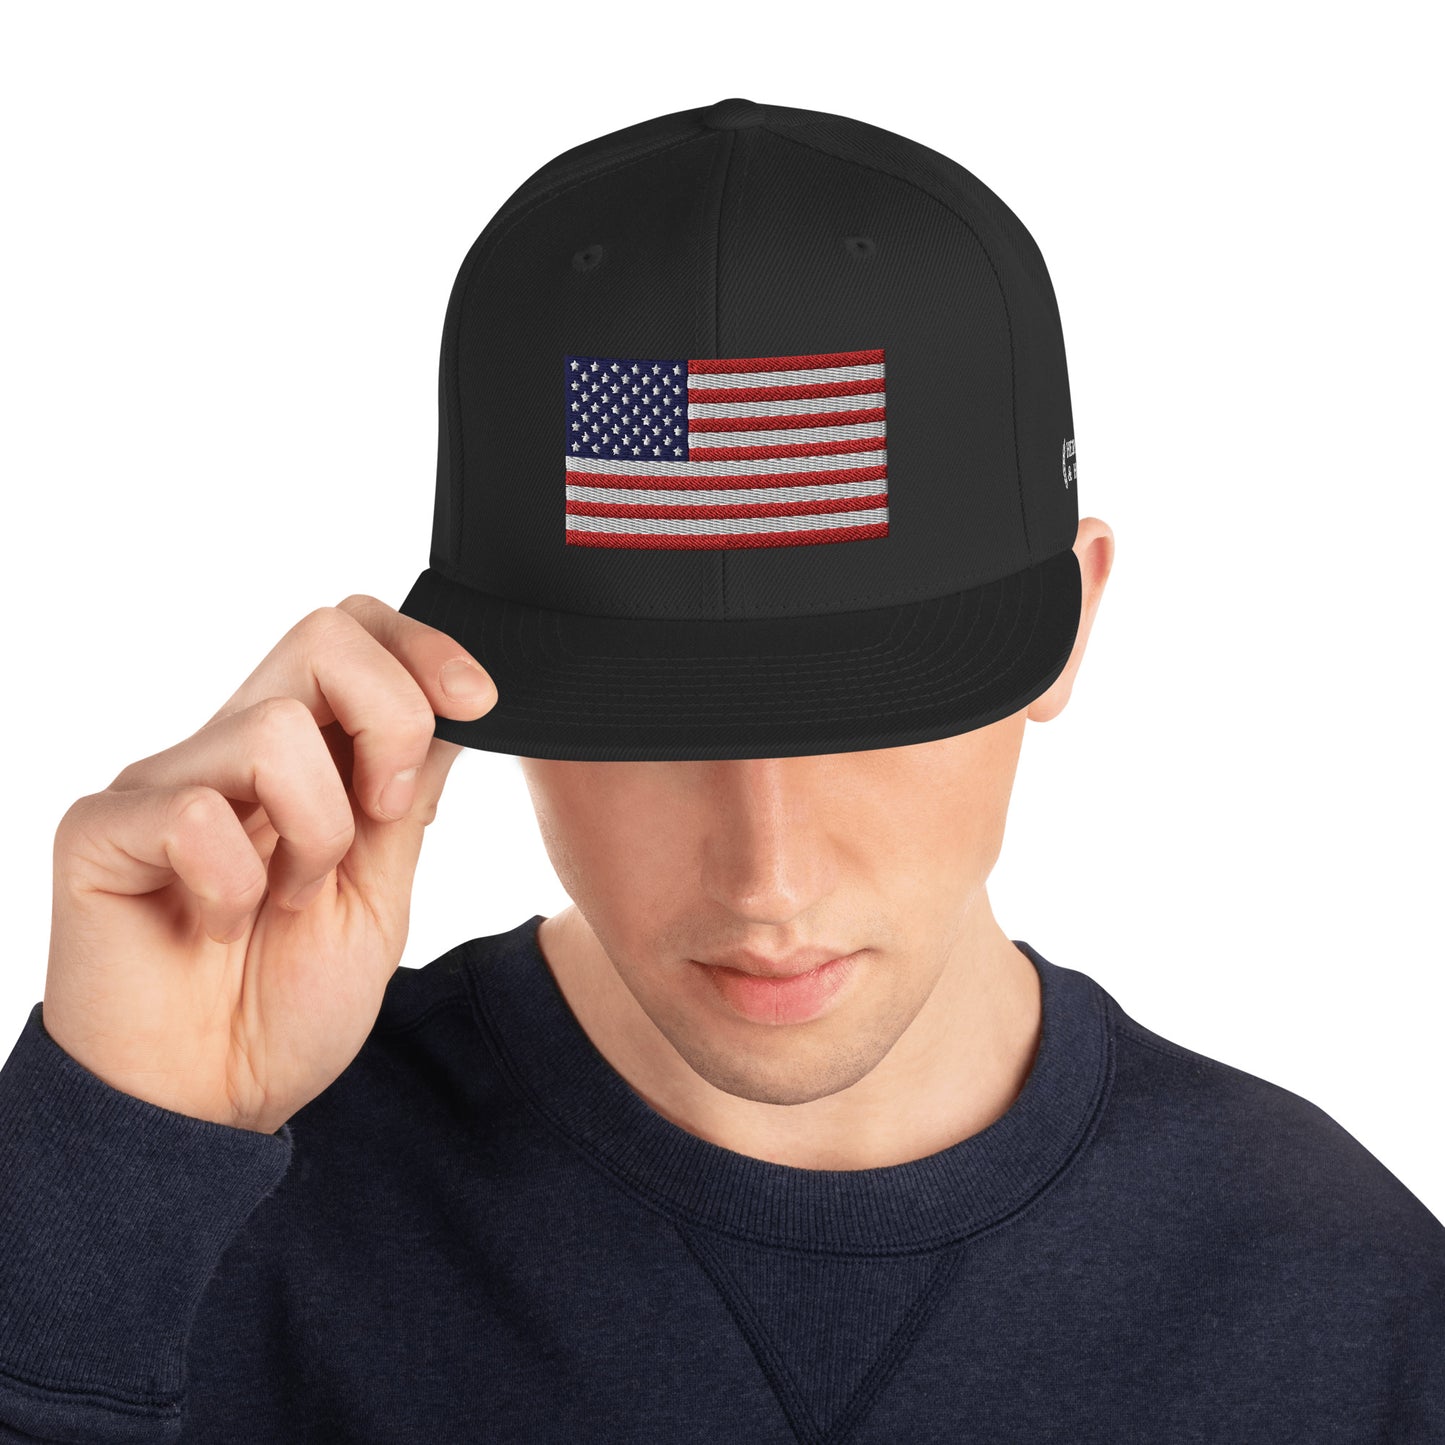 Heritage & Honor Snapback Cap 'USA' 2